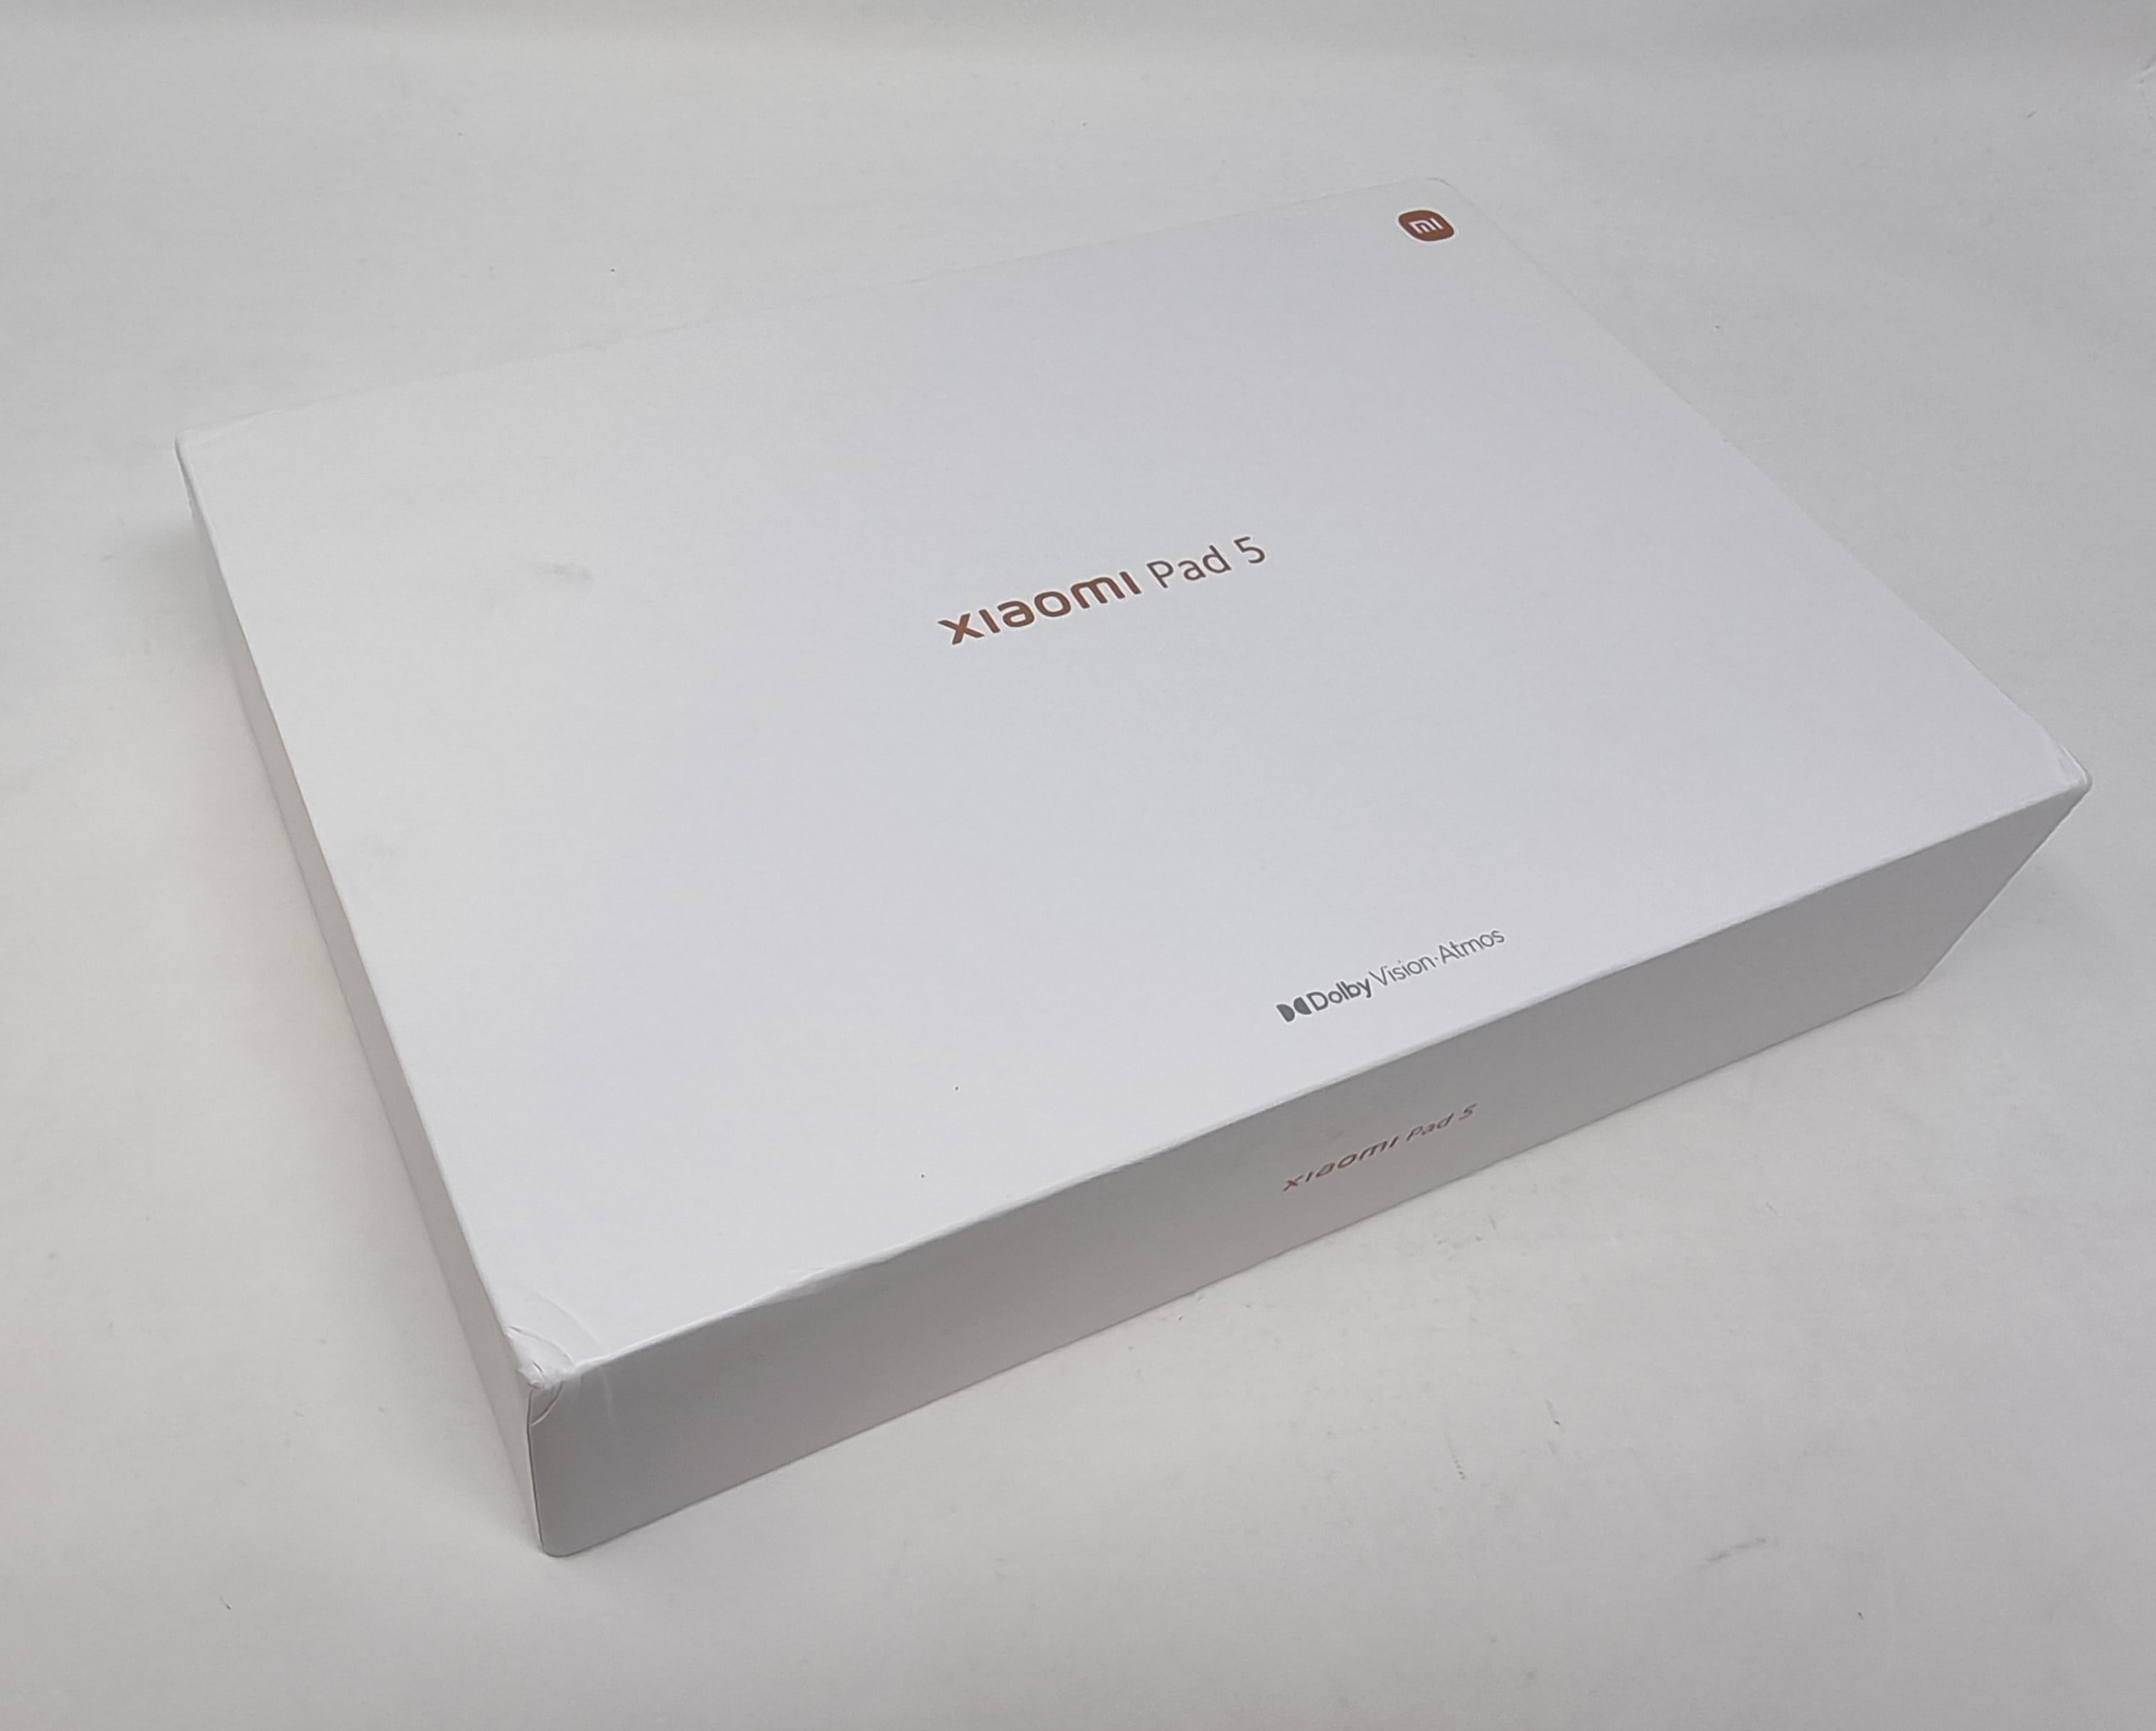 Xiaomi Pad 5 (6GB+128GB/6GB+256GB) Global Version With 1-year Warranty